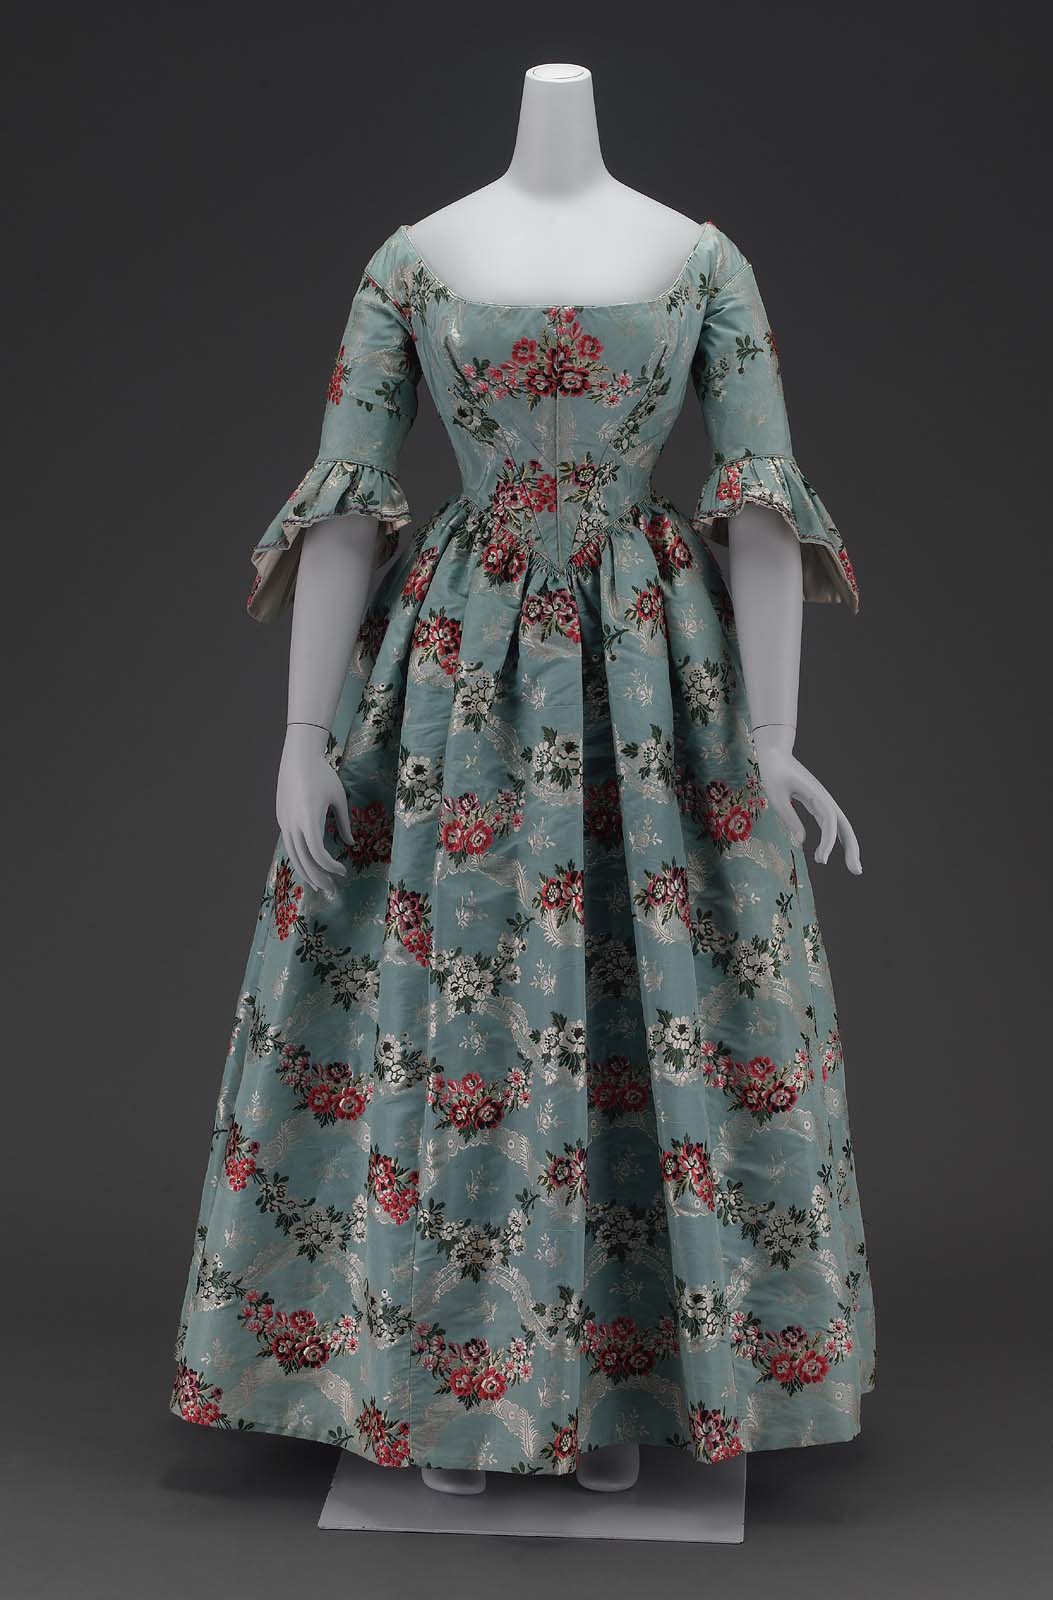 brocade dress 19th century